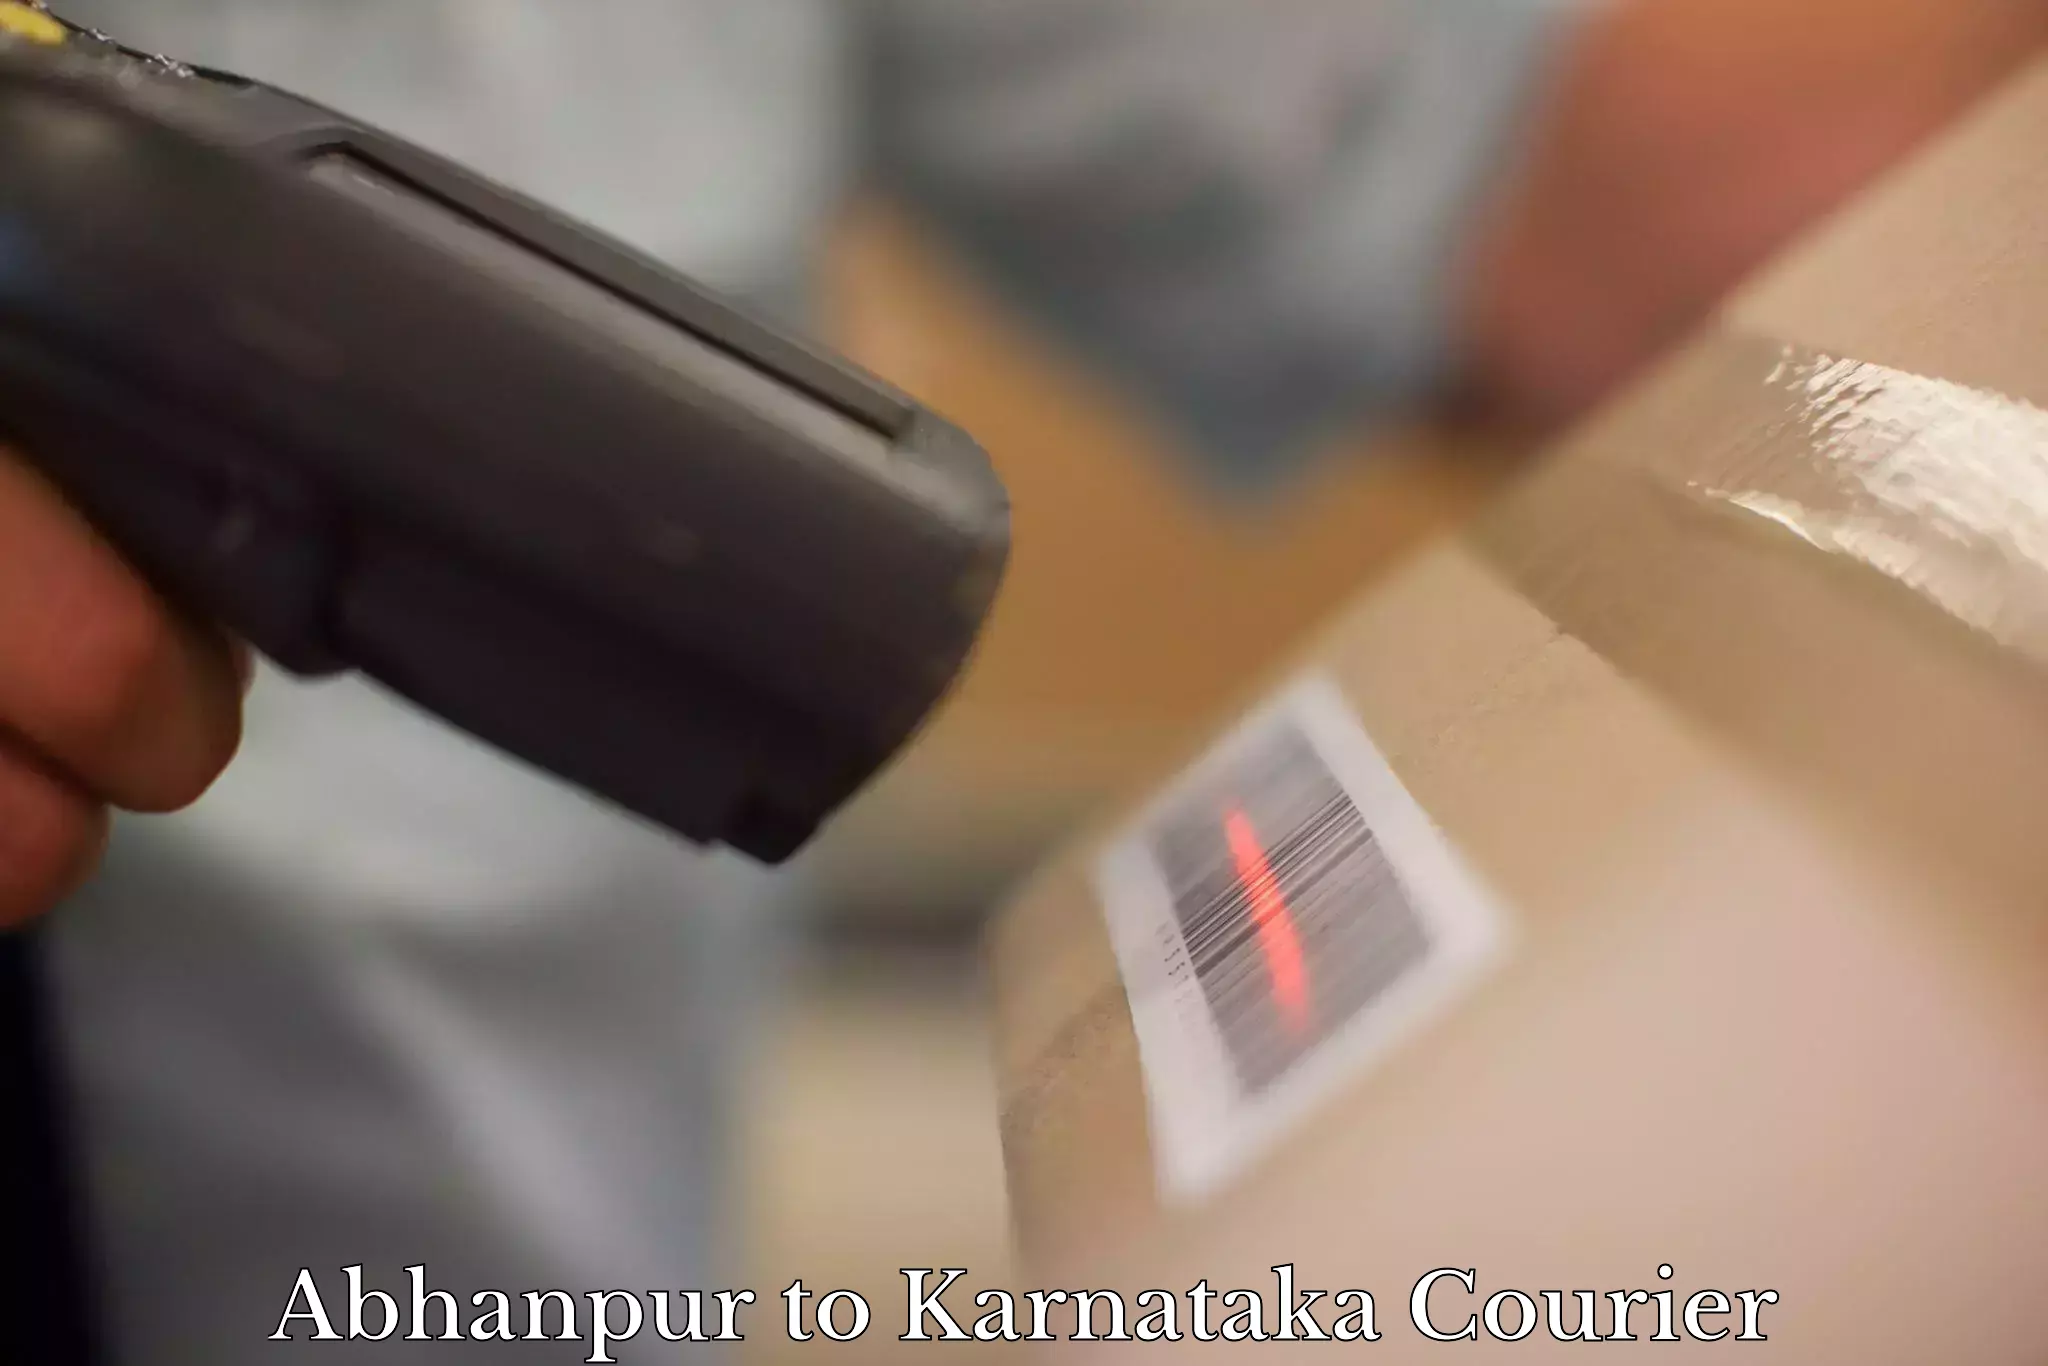 Budget-friendly movers Abhanpur to Karnataka